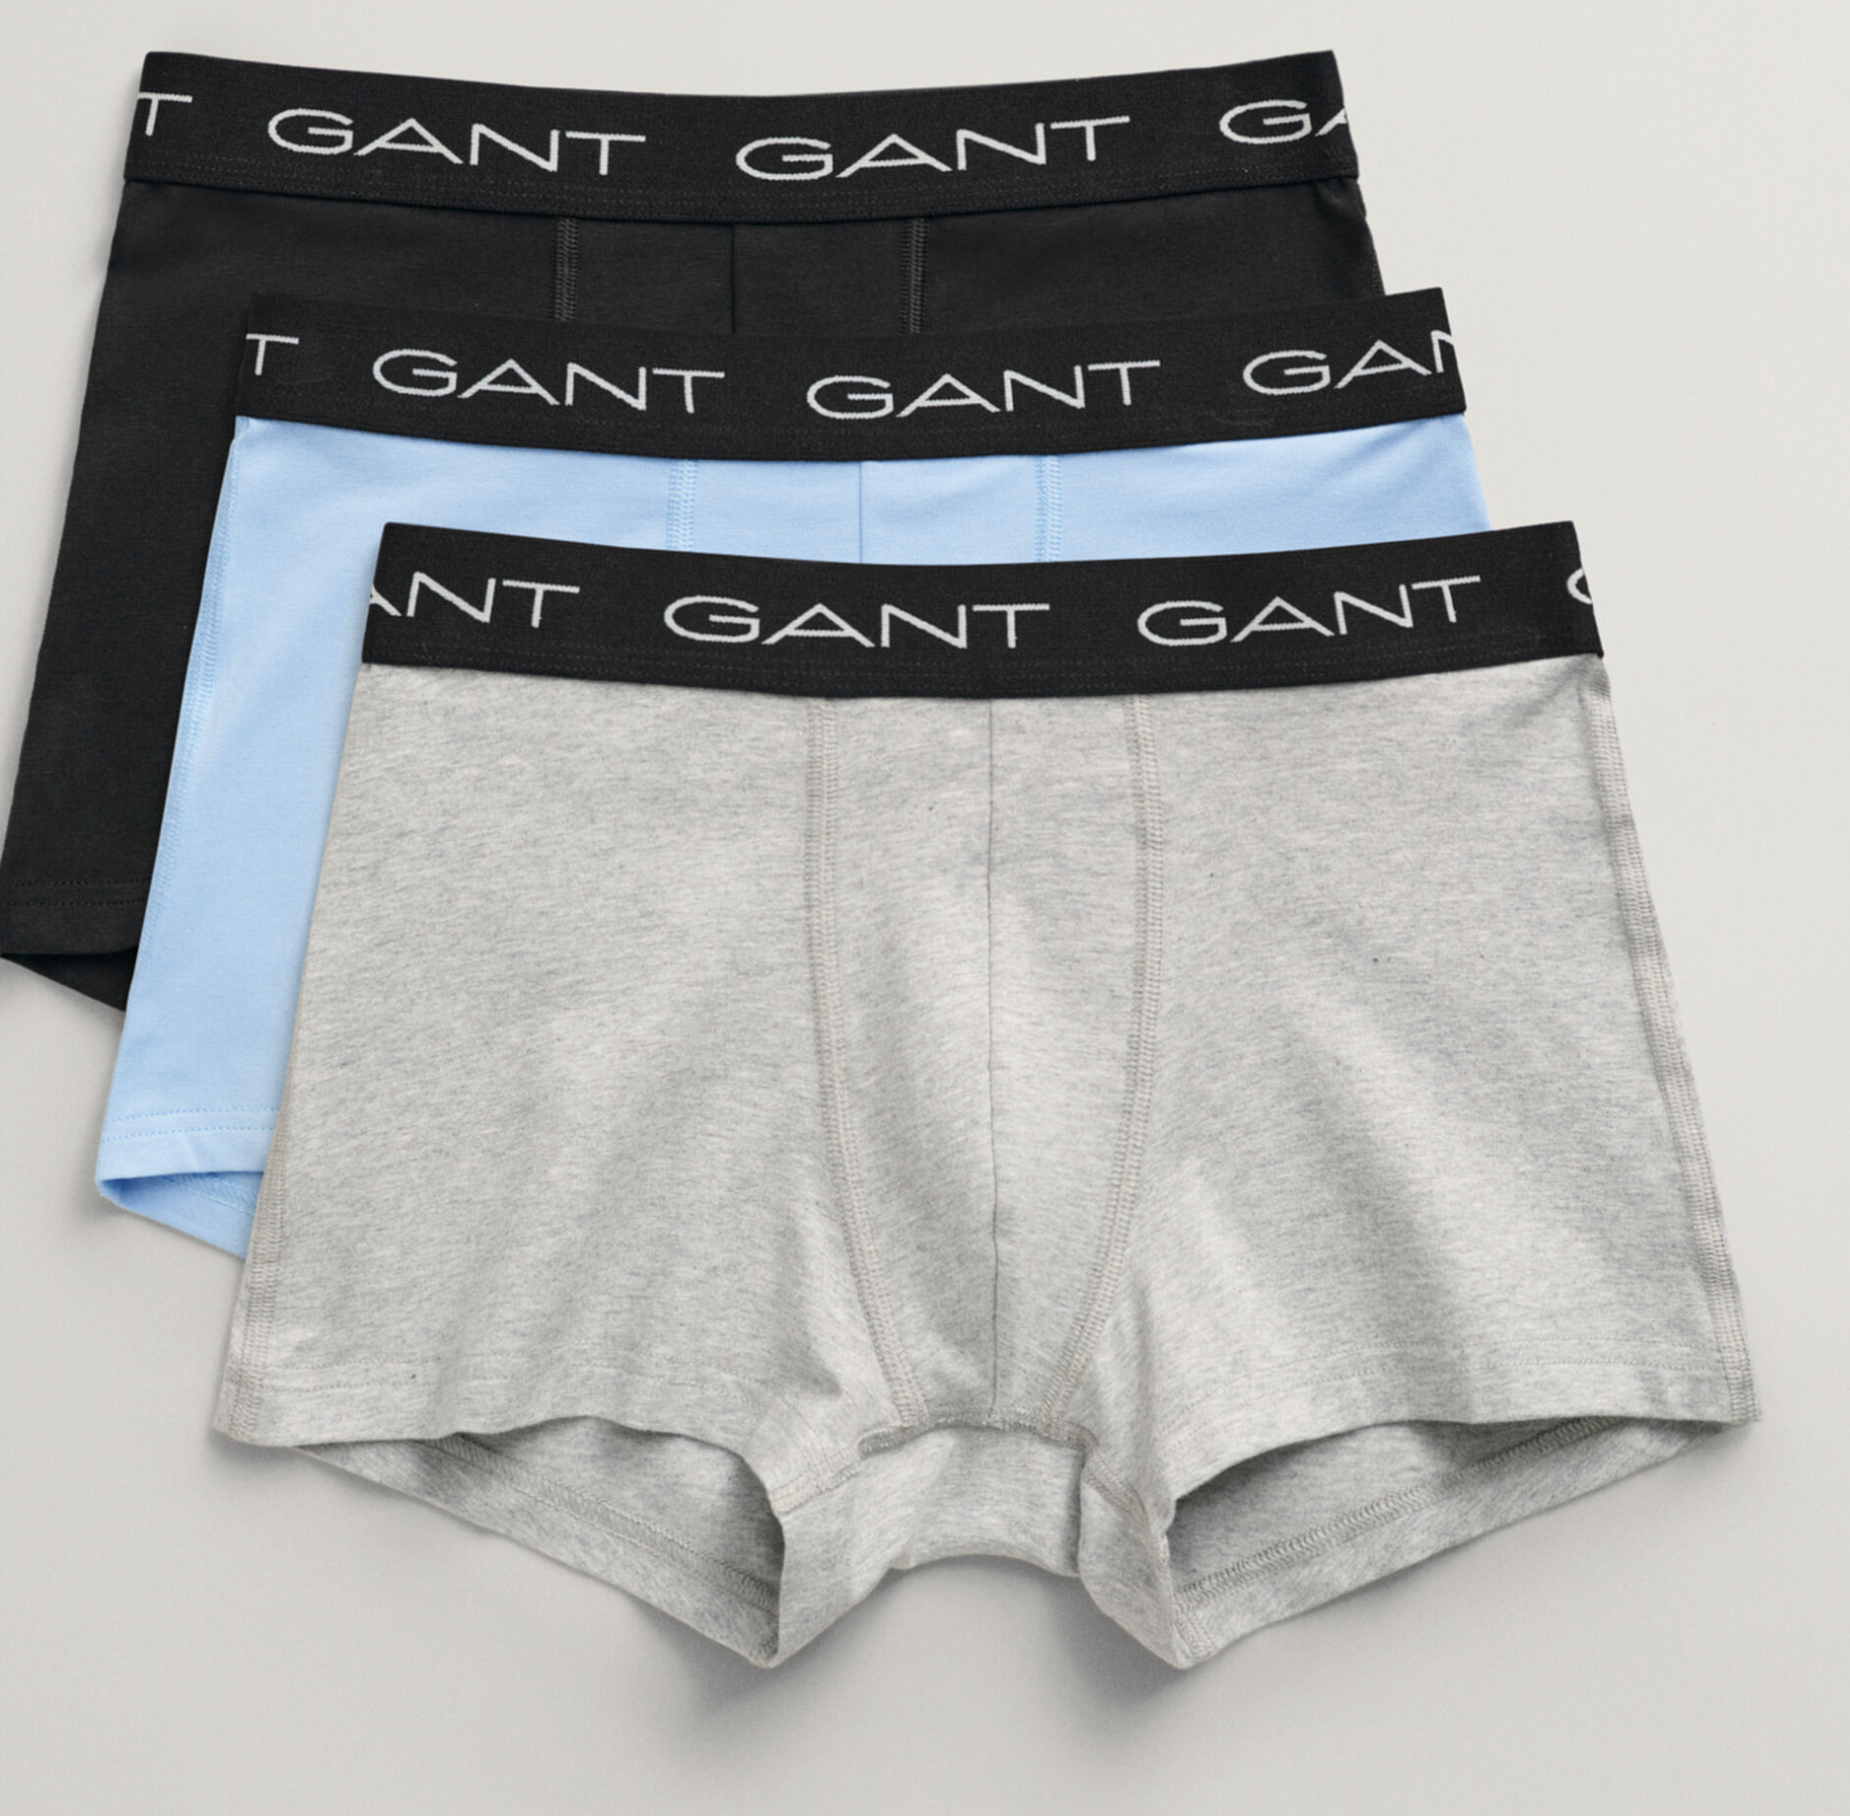 Gant 3 Pack Trunk Multi - Colour